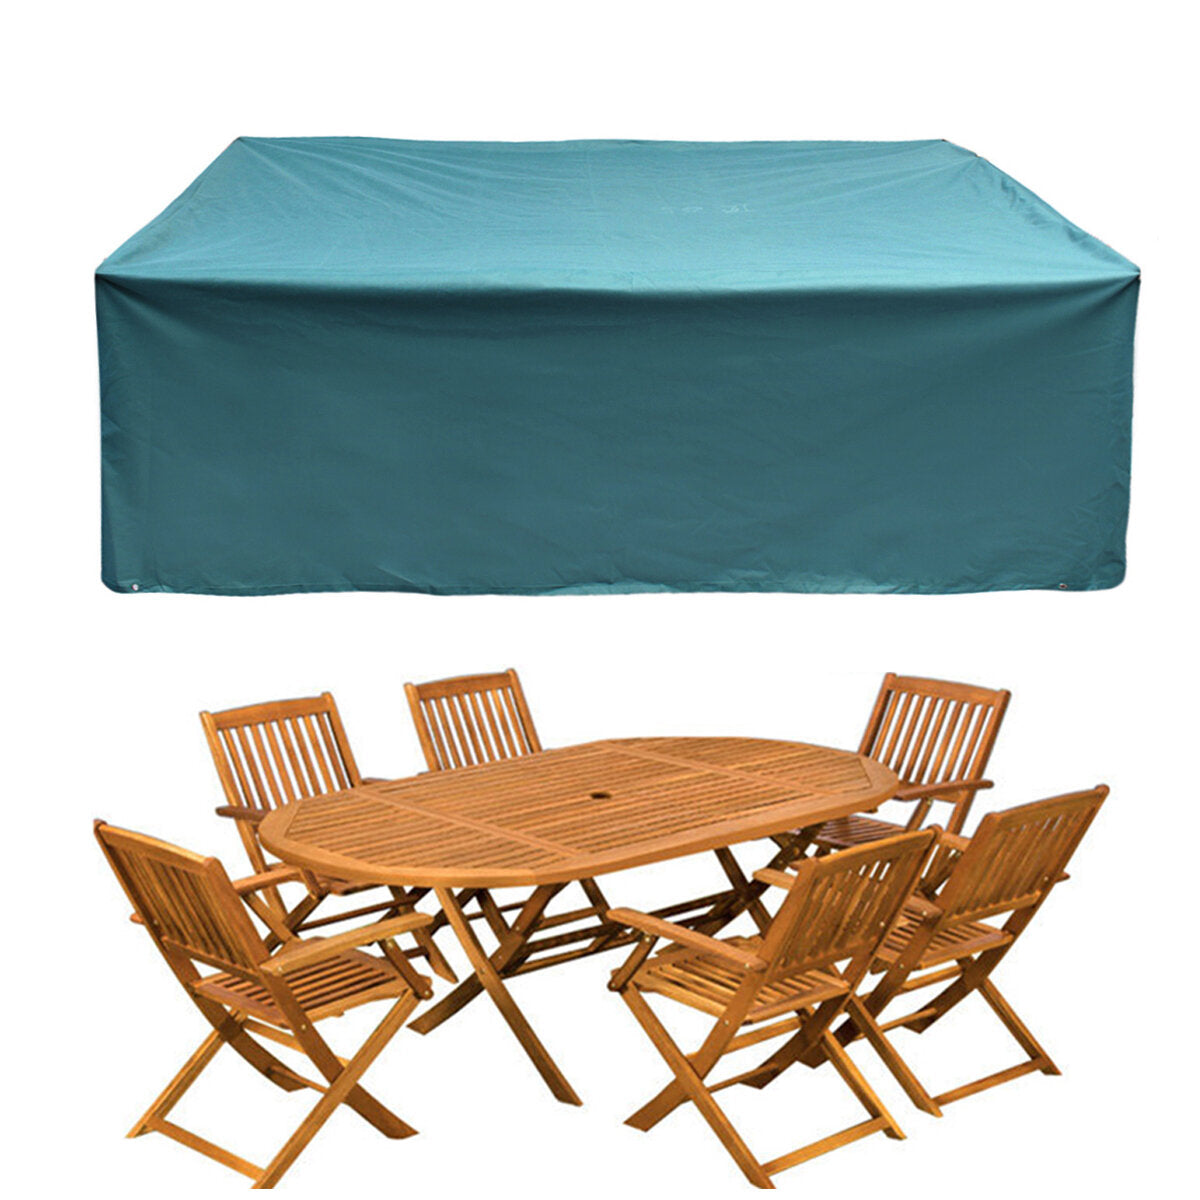 Outdoor Furniture Waterproof Cover Patio Garden Rattan Swing Chair UV Sun Rain Dust Protector